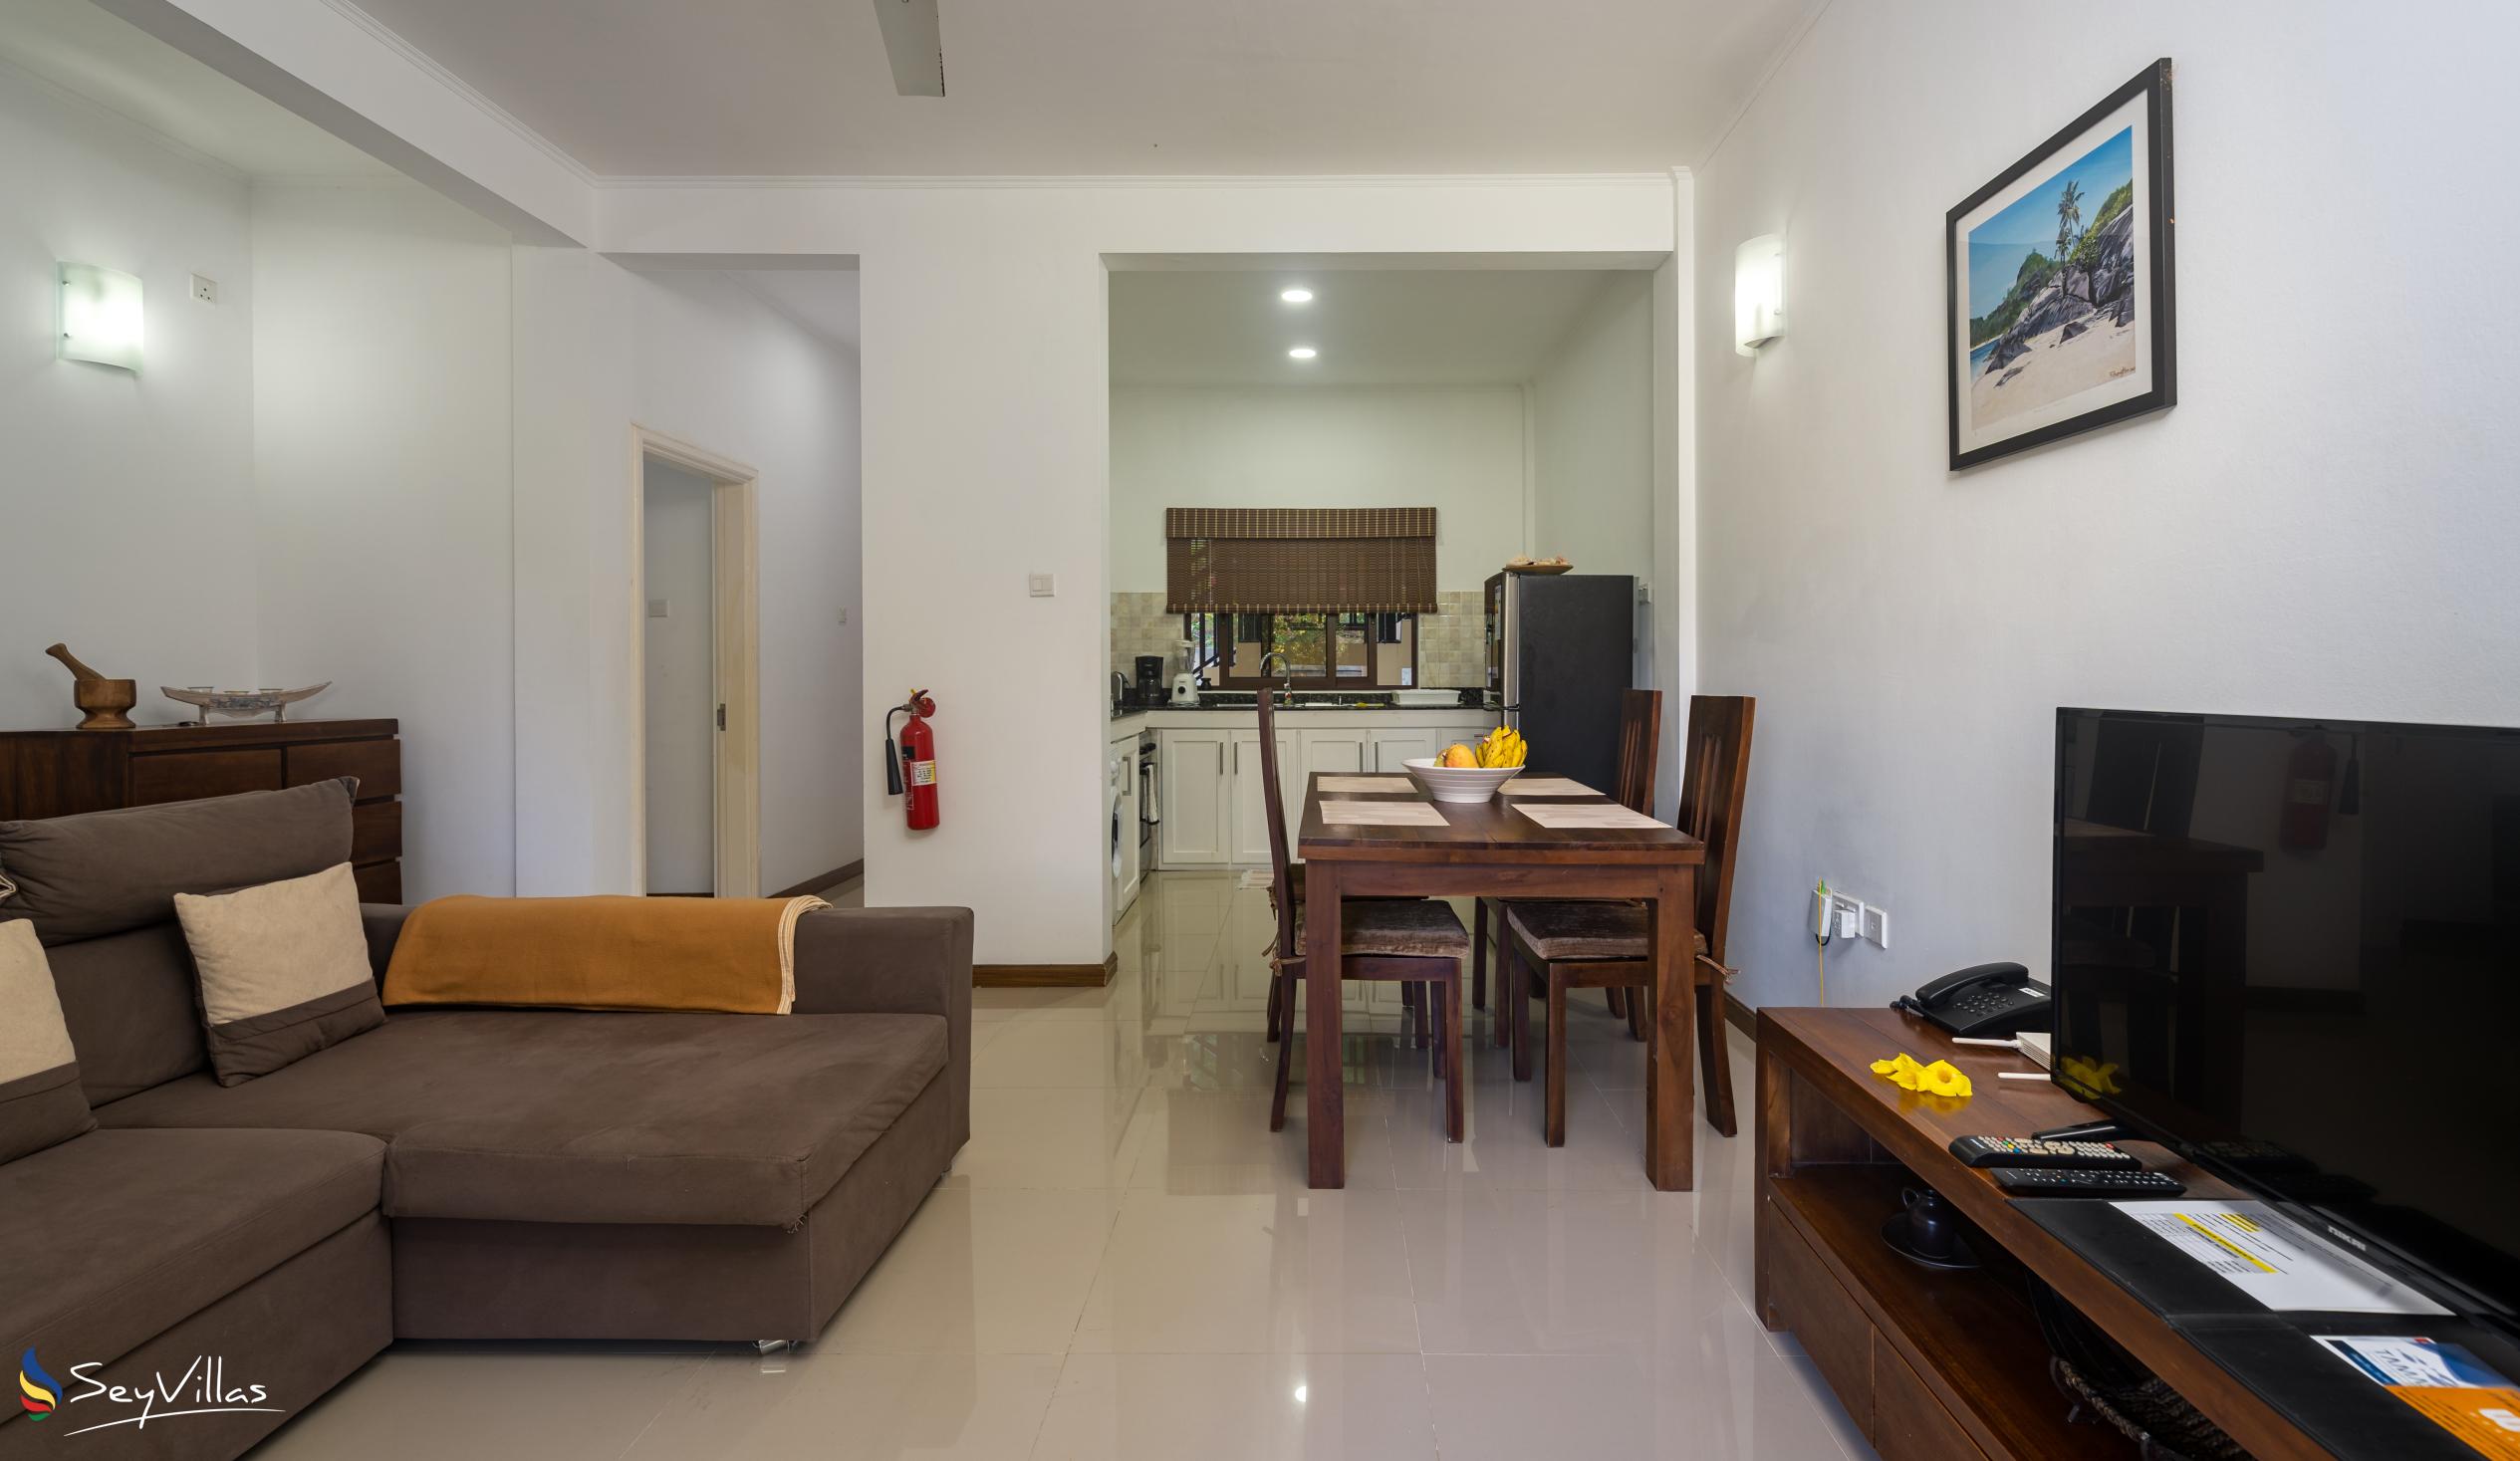 Foto 22: Kanasuk Self Catering Apartments - Appartement Cinnamon 2 chambres - Mahé (Seychelles)